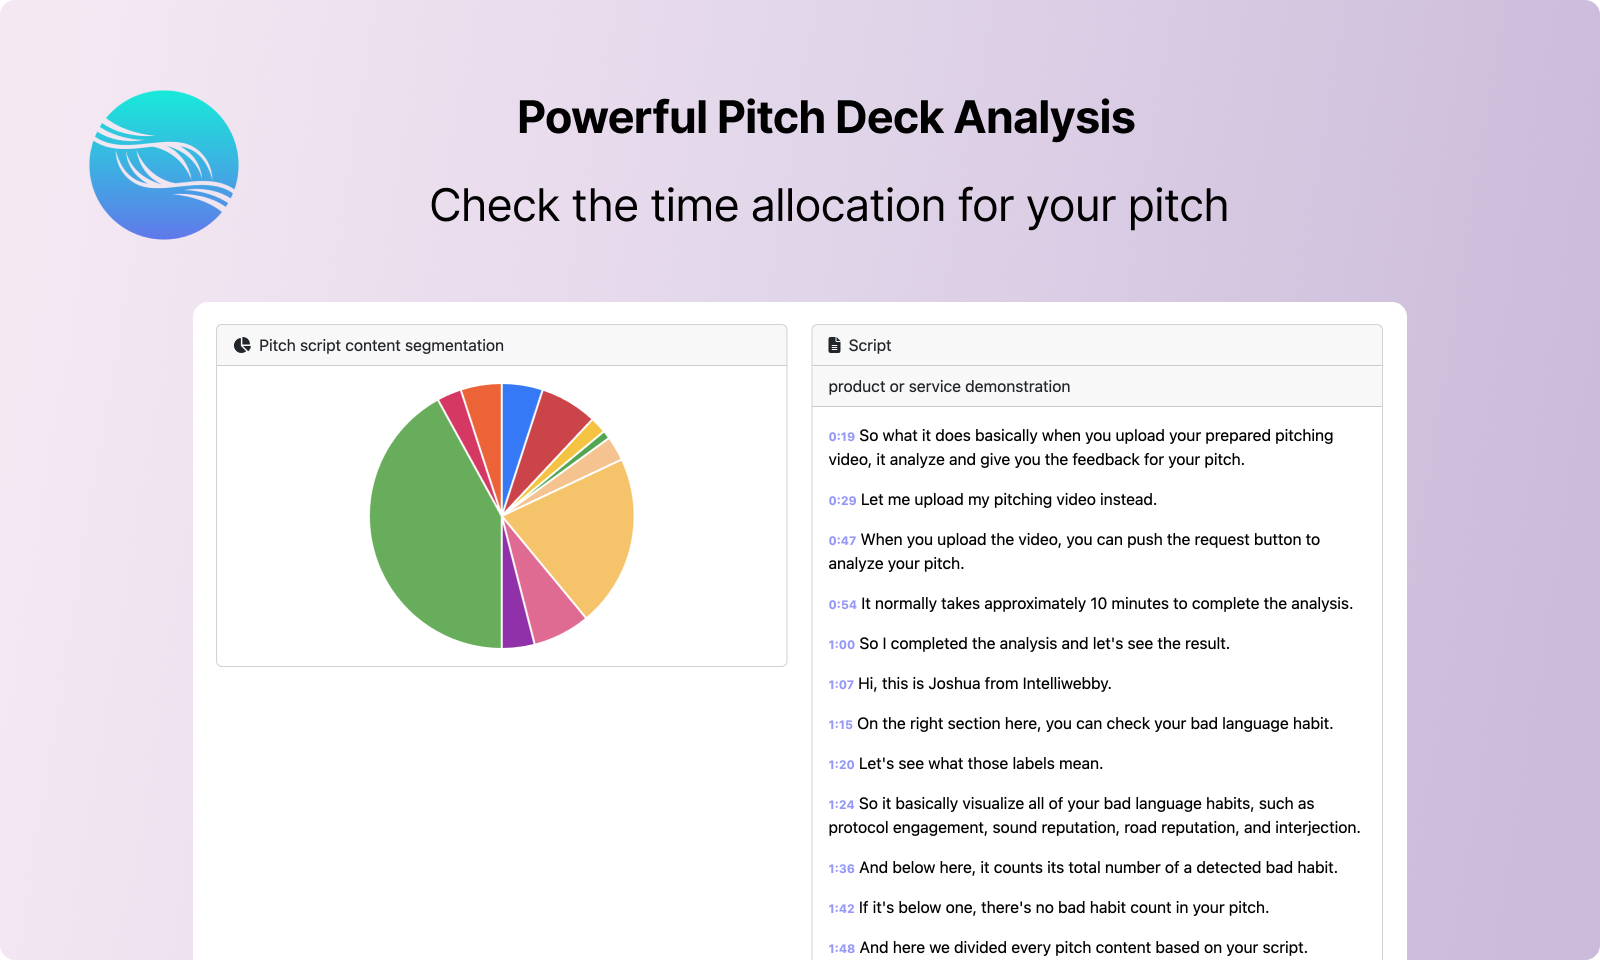 Pitch Deck Analysis with proper pitch segmentation in Intelliwebi - Pitch deck Analysis tool